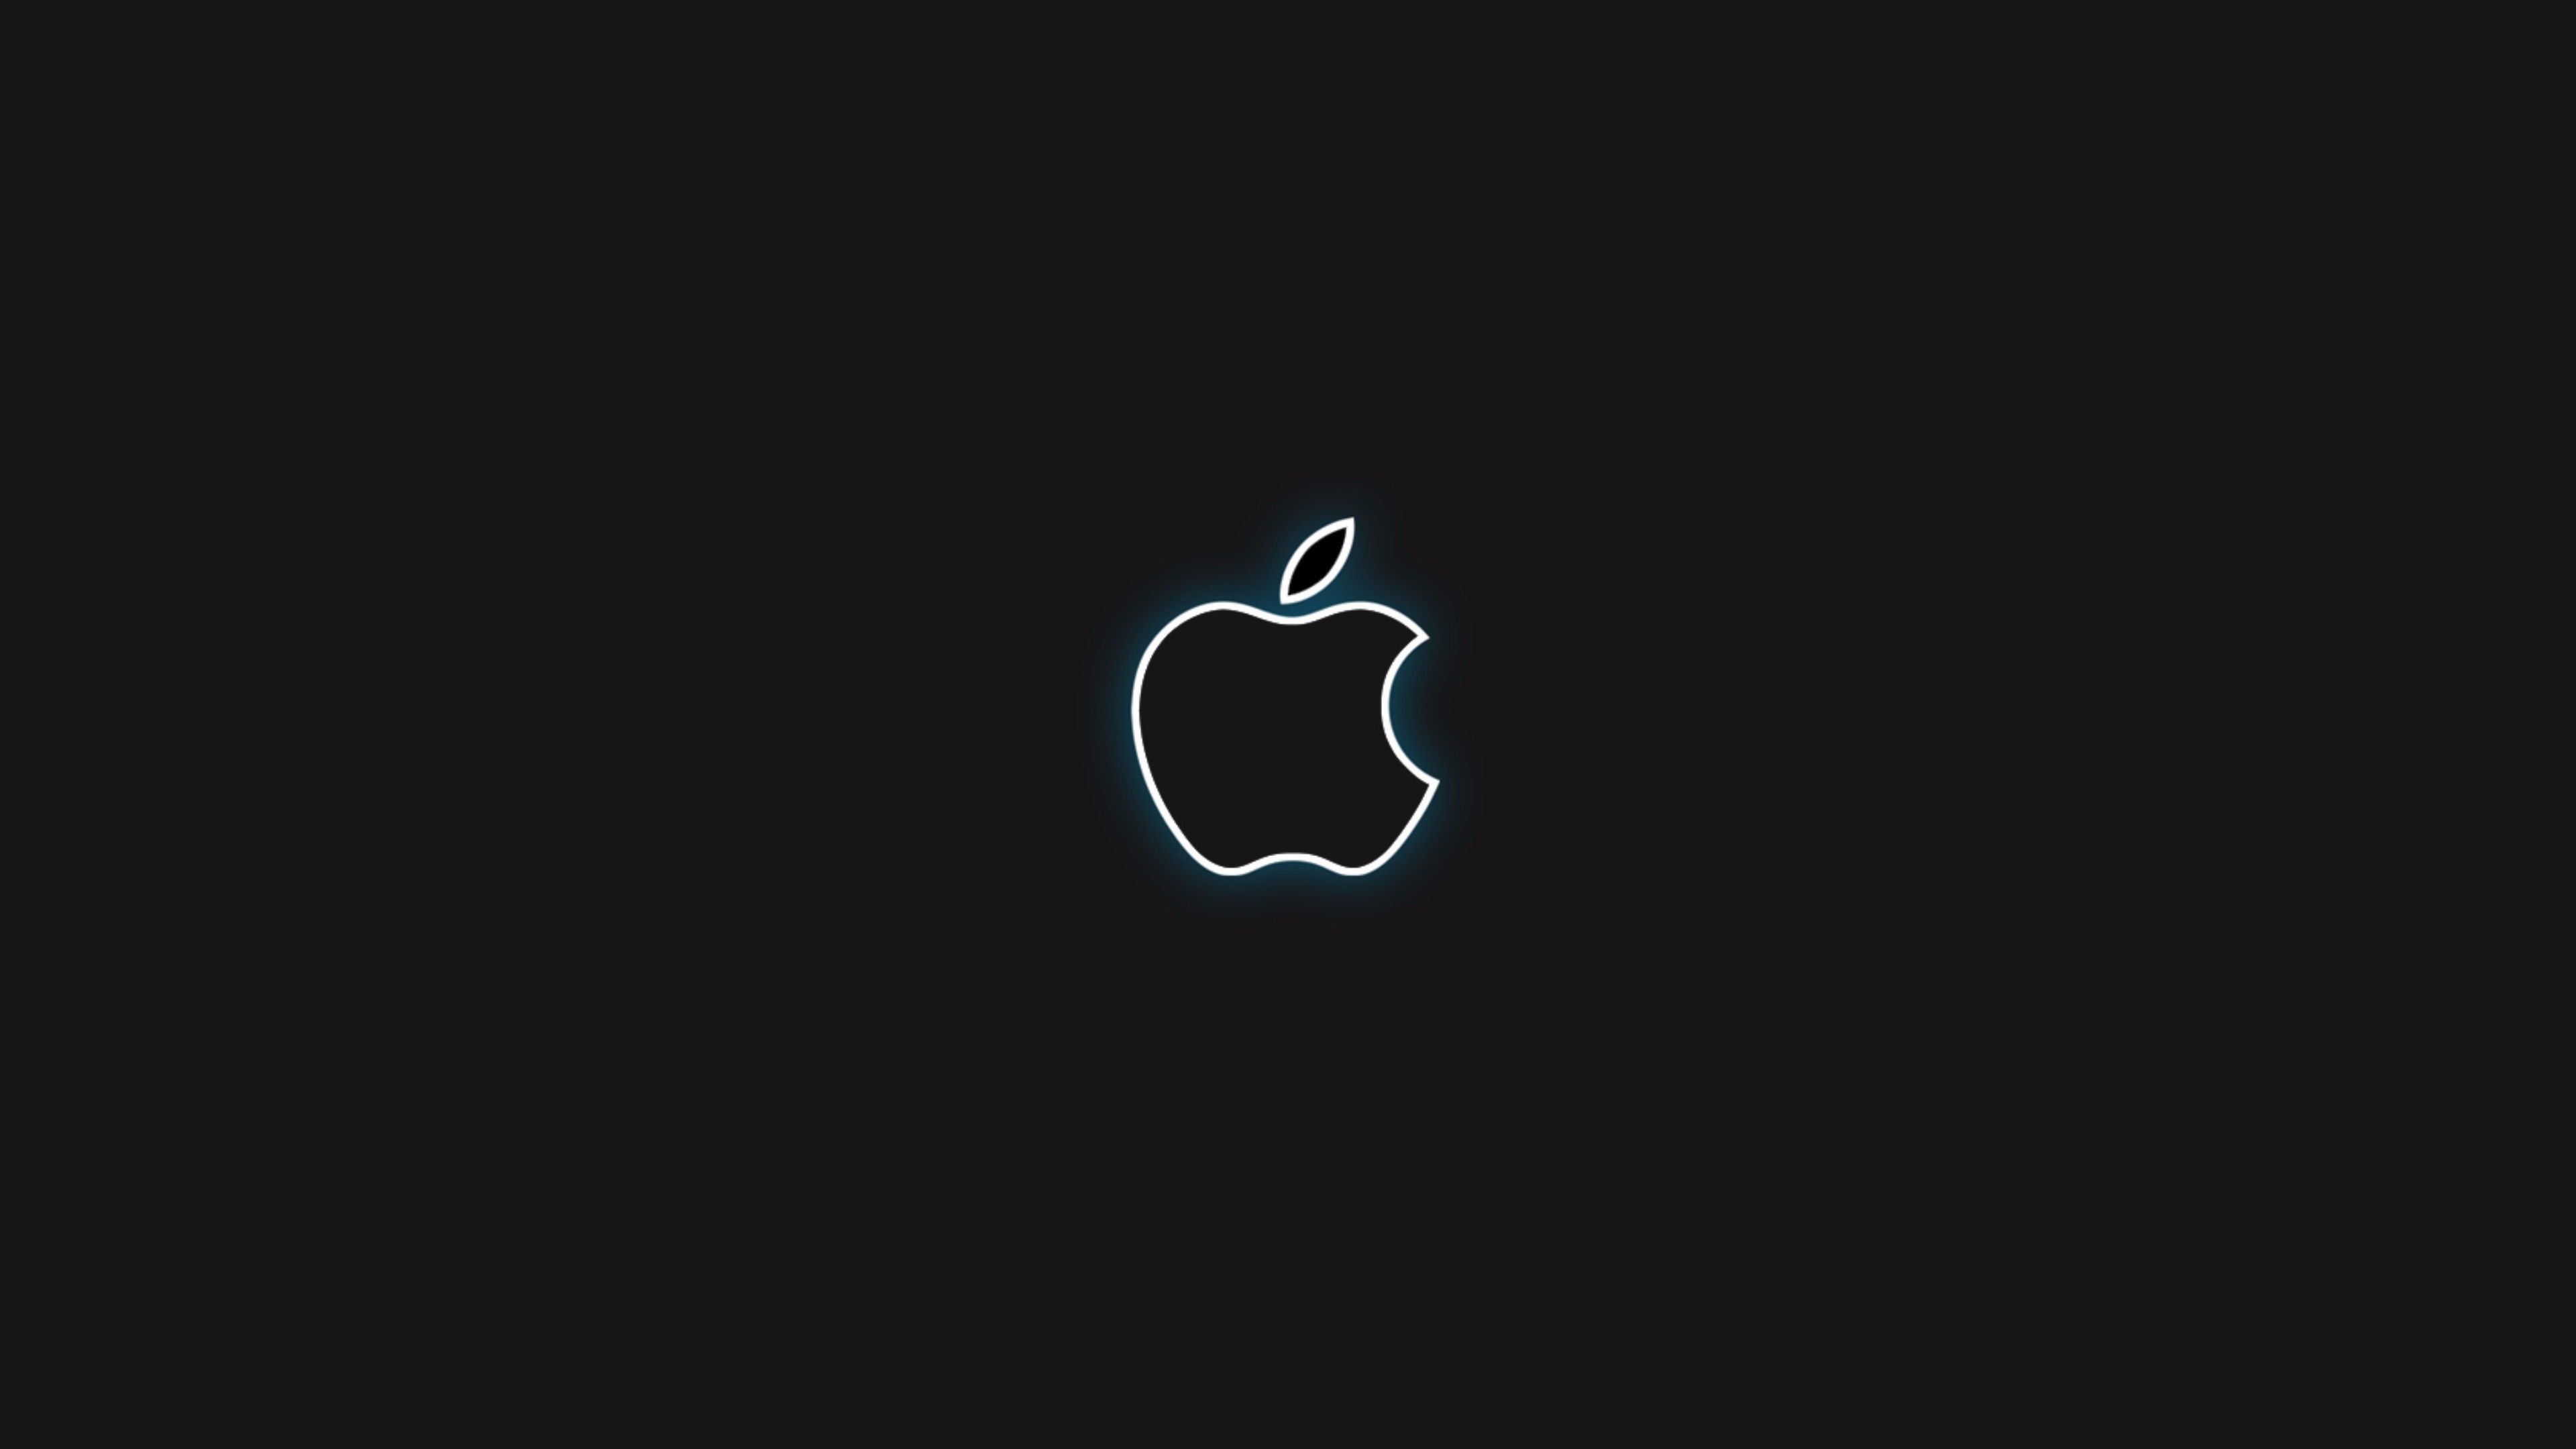 black apple logo 4k wallpaper free 4k wallpaper. Black apple wallpaper, Black apple logo, Apple logo wallpaper